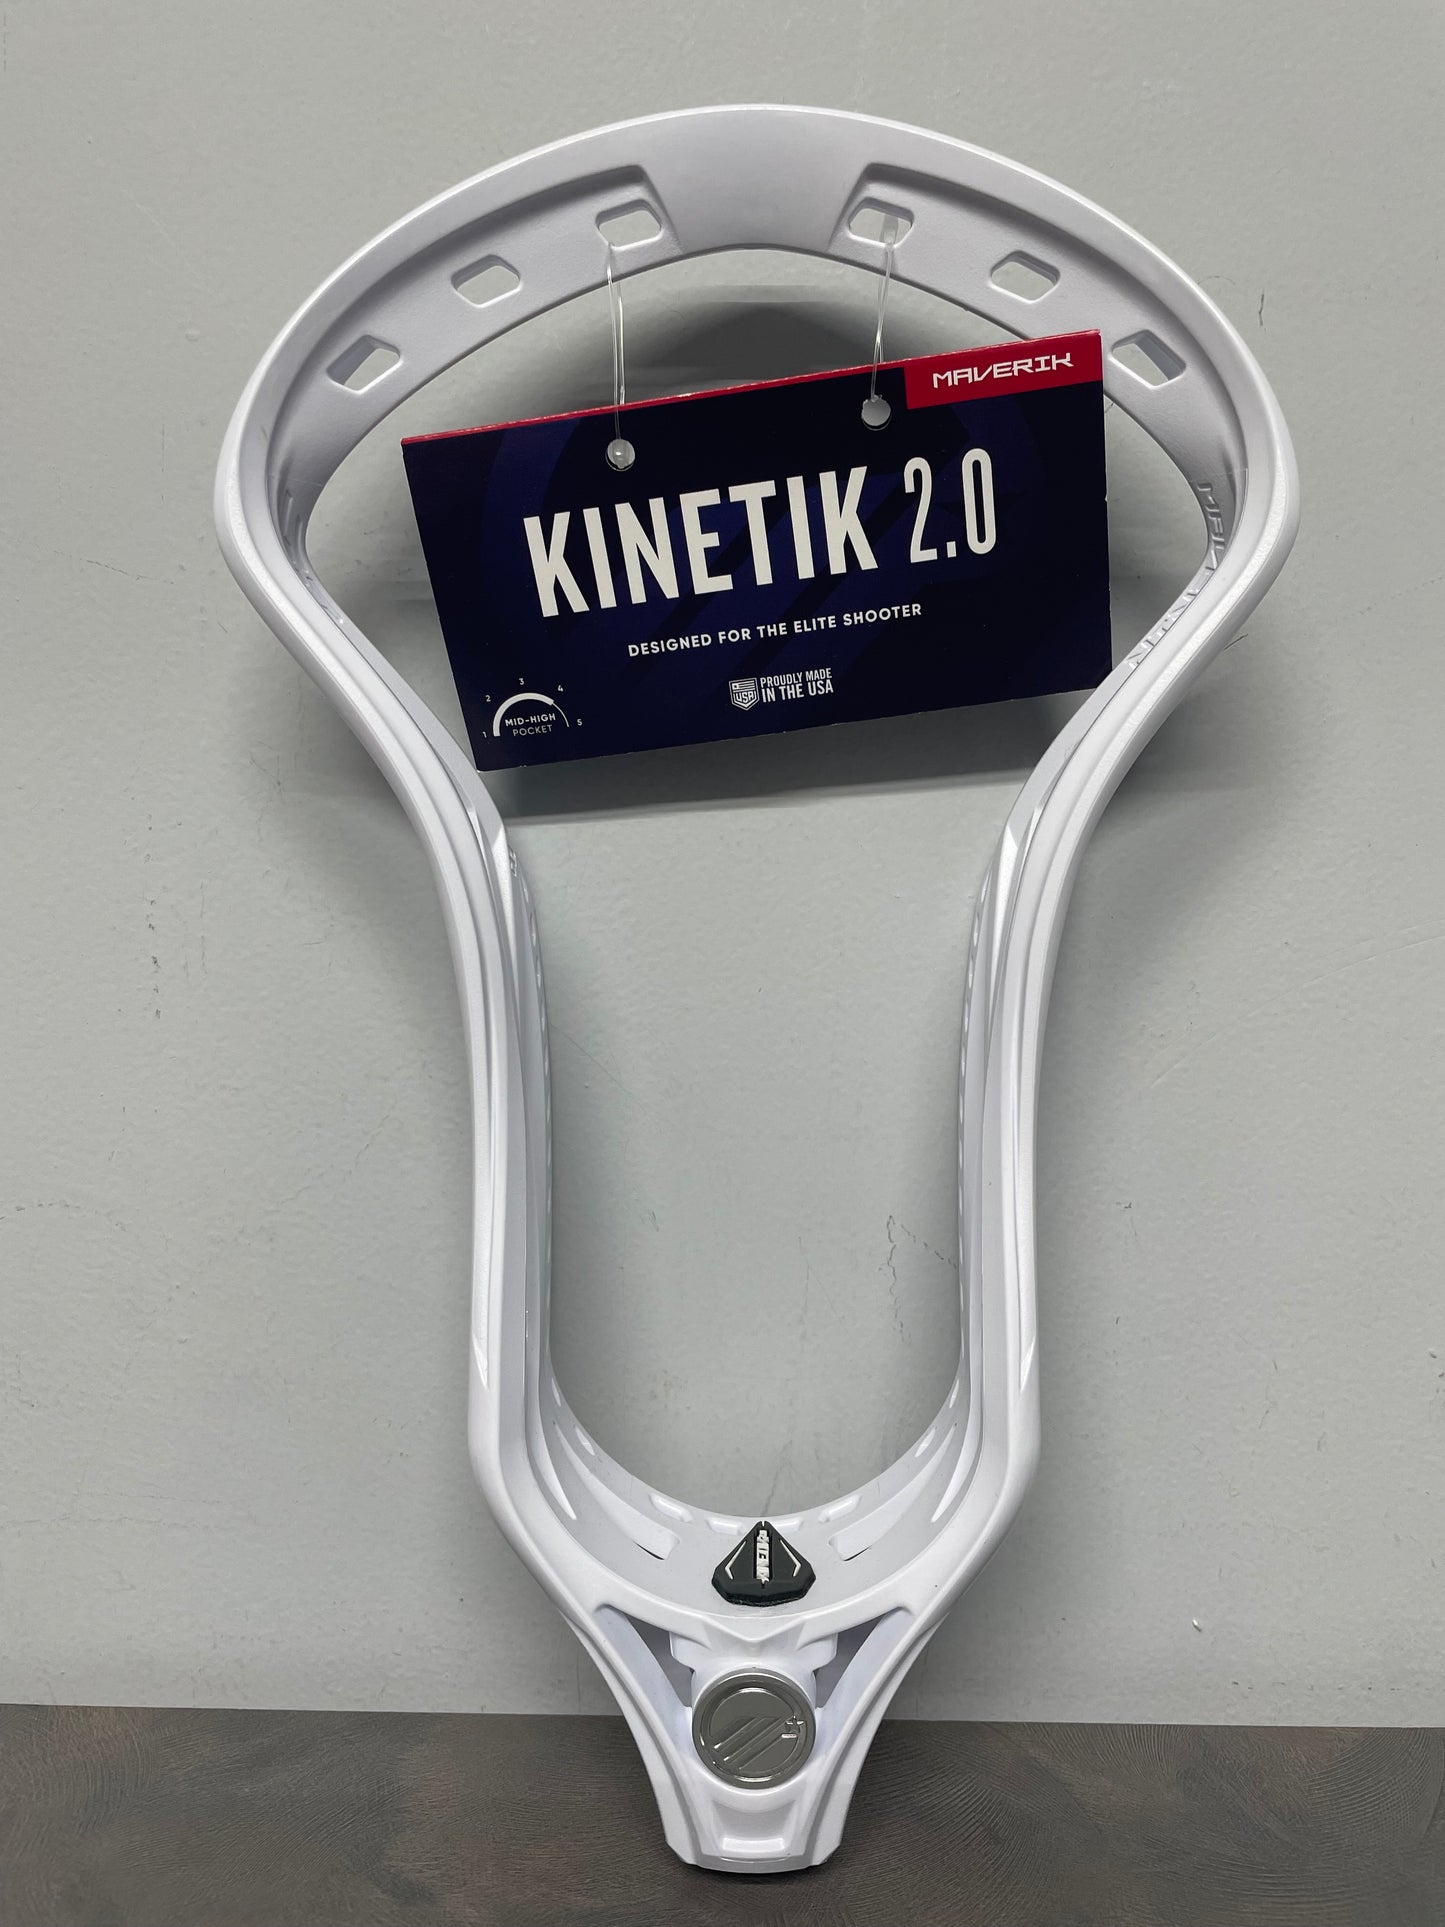 Maverik Kinetik 3 custom strung lacrosse head